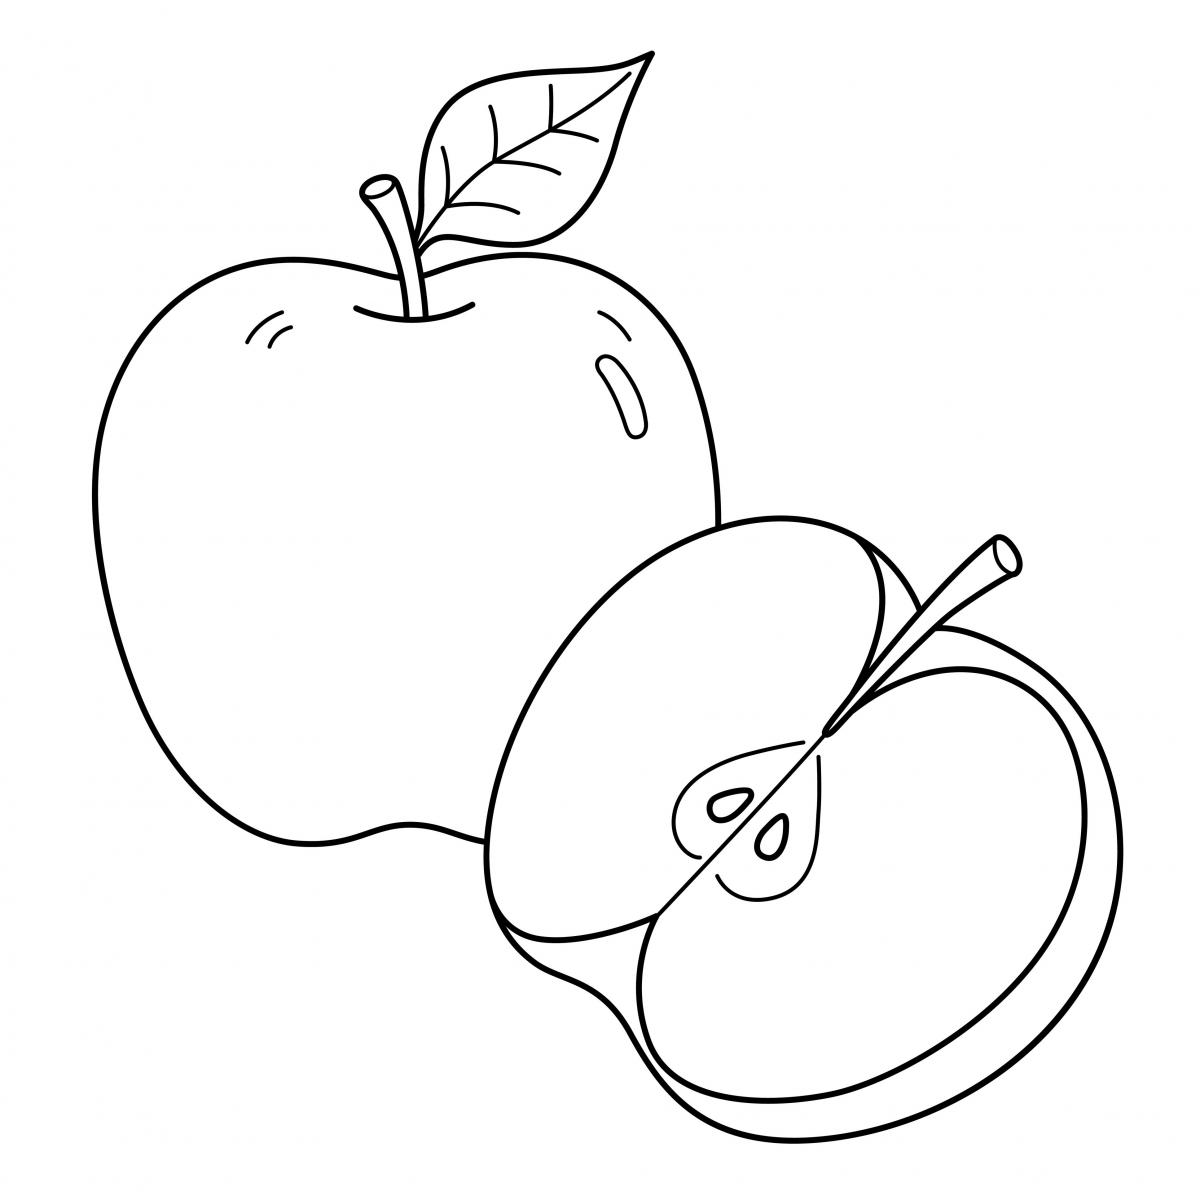 kontur jabłka do pokolorowania